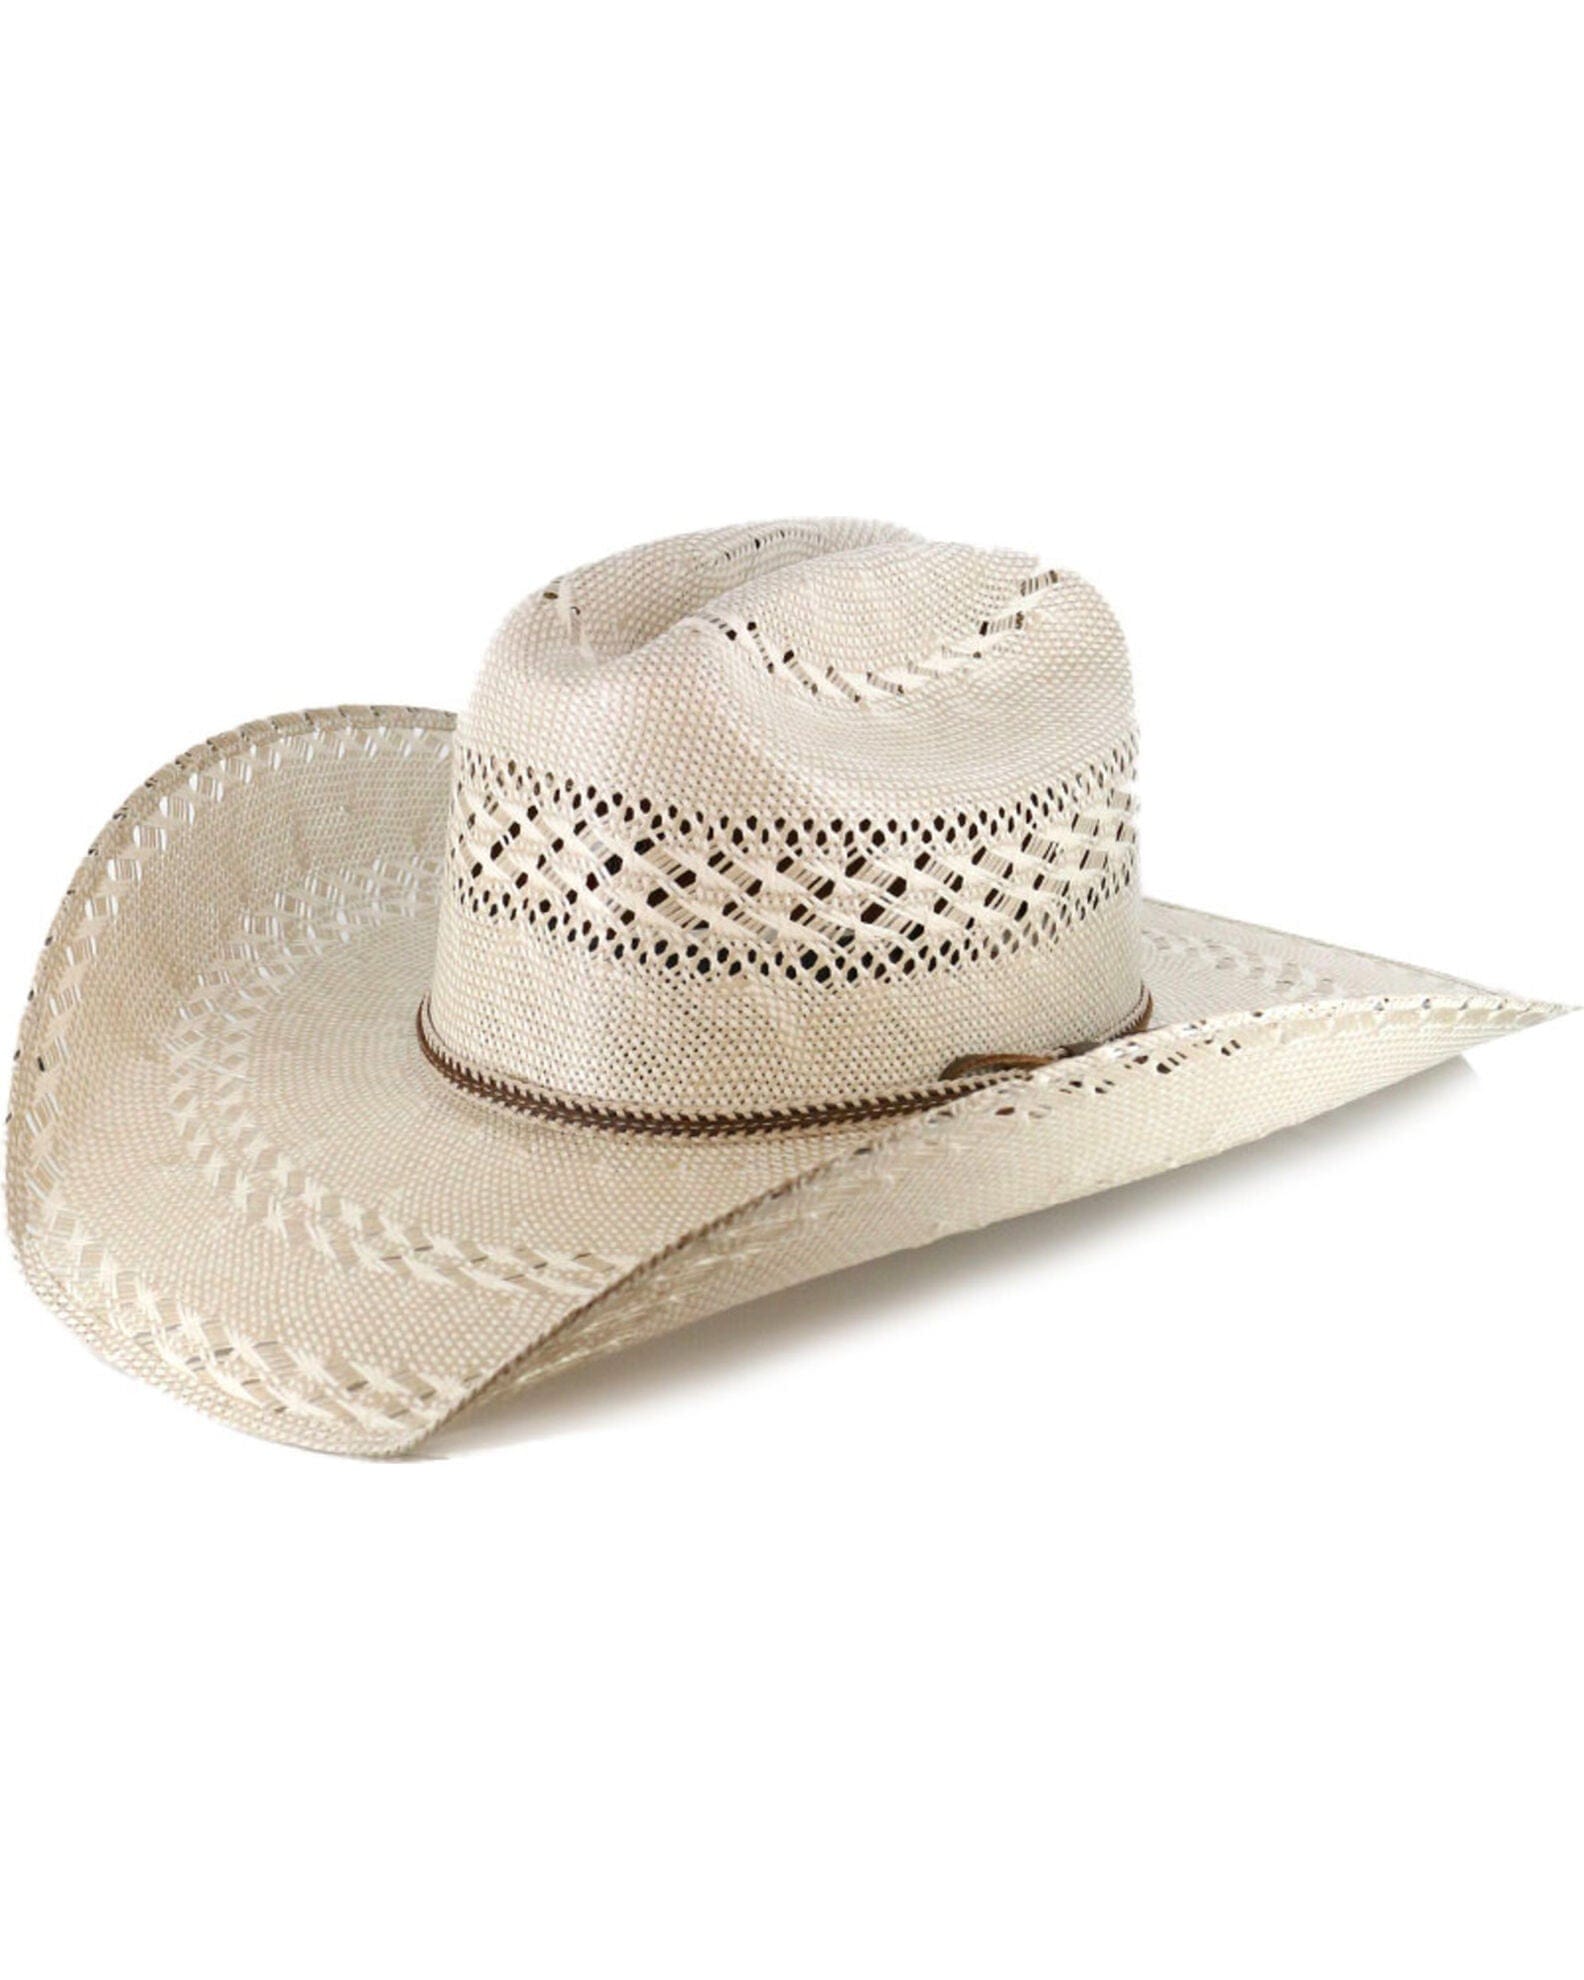 JUSTIN HATS Hats Justin Men’s Bent Rail Two Tone Vented Crown Straw Cowboy Hat JS2556GRET